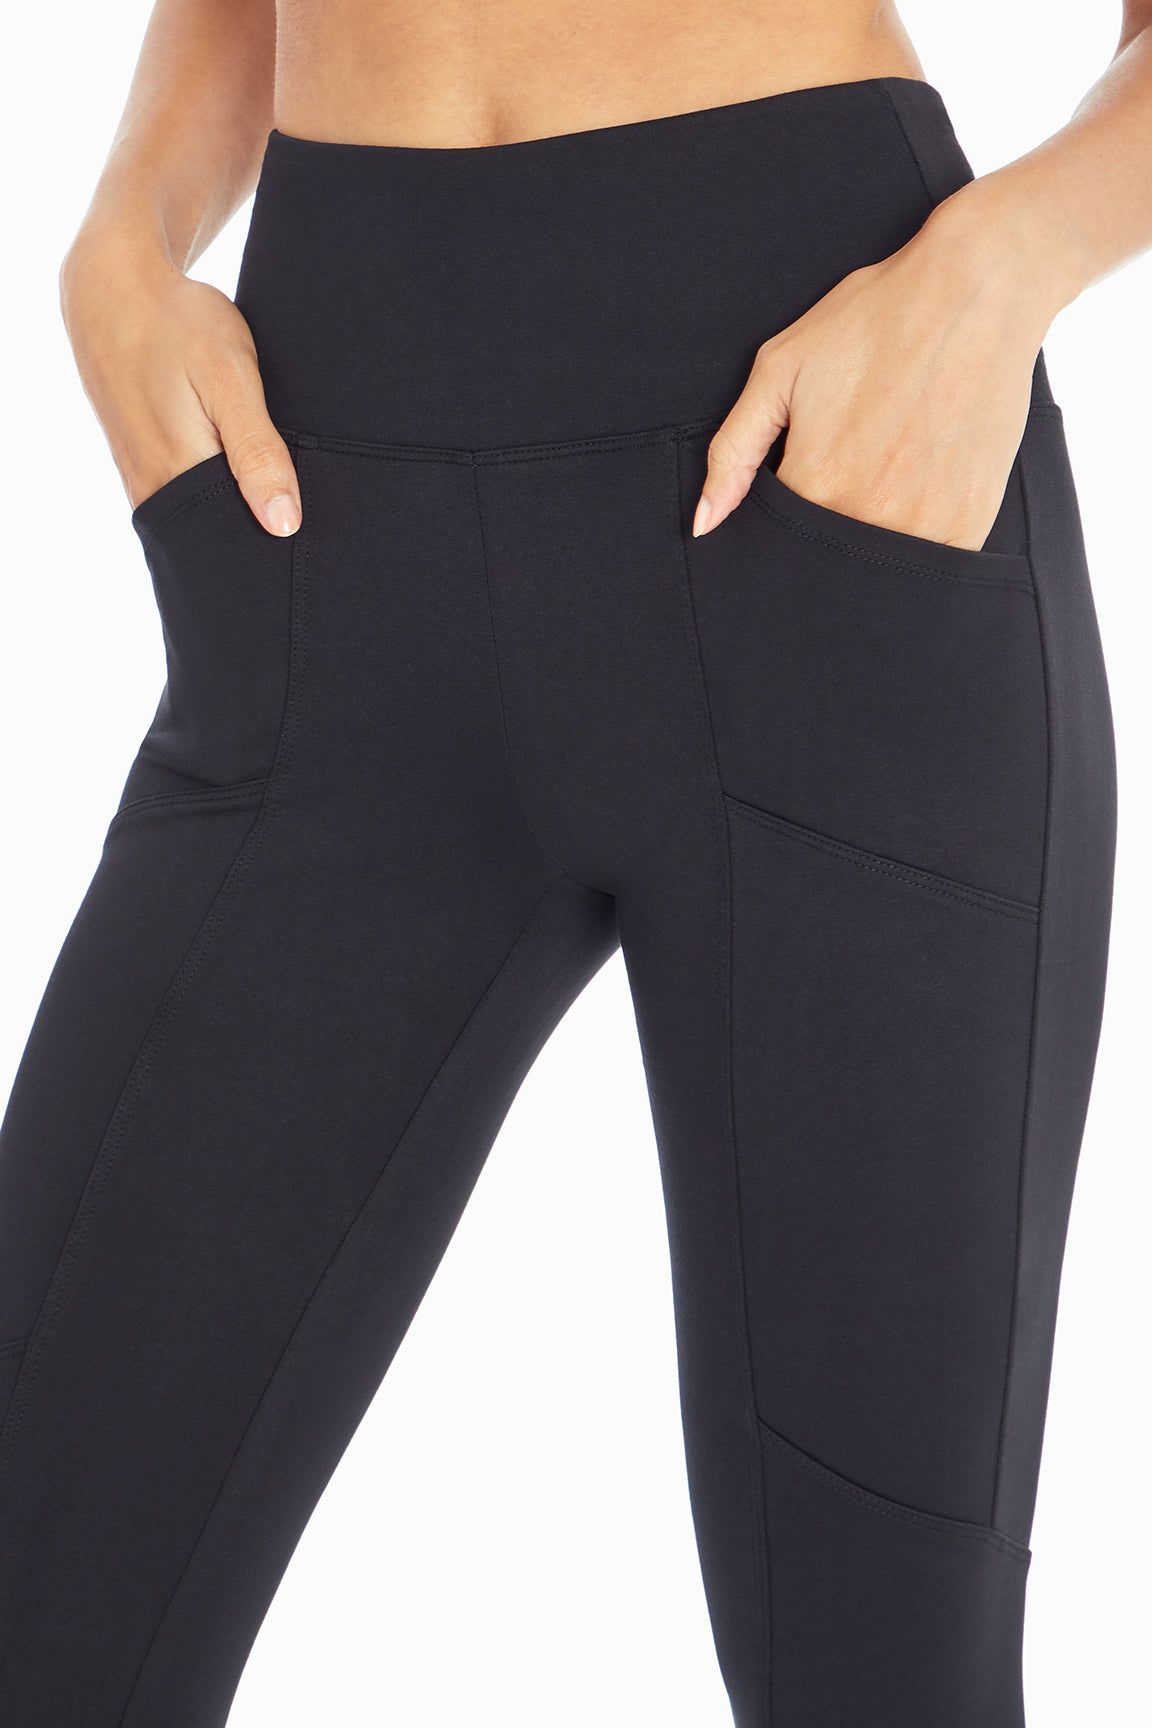 Alisha D Jillian Ponte Knit Legging Featuring Dual Layer Tummy Control — L  and L Stuff